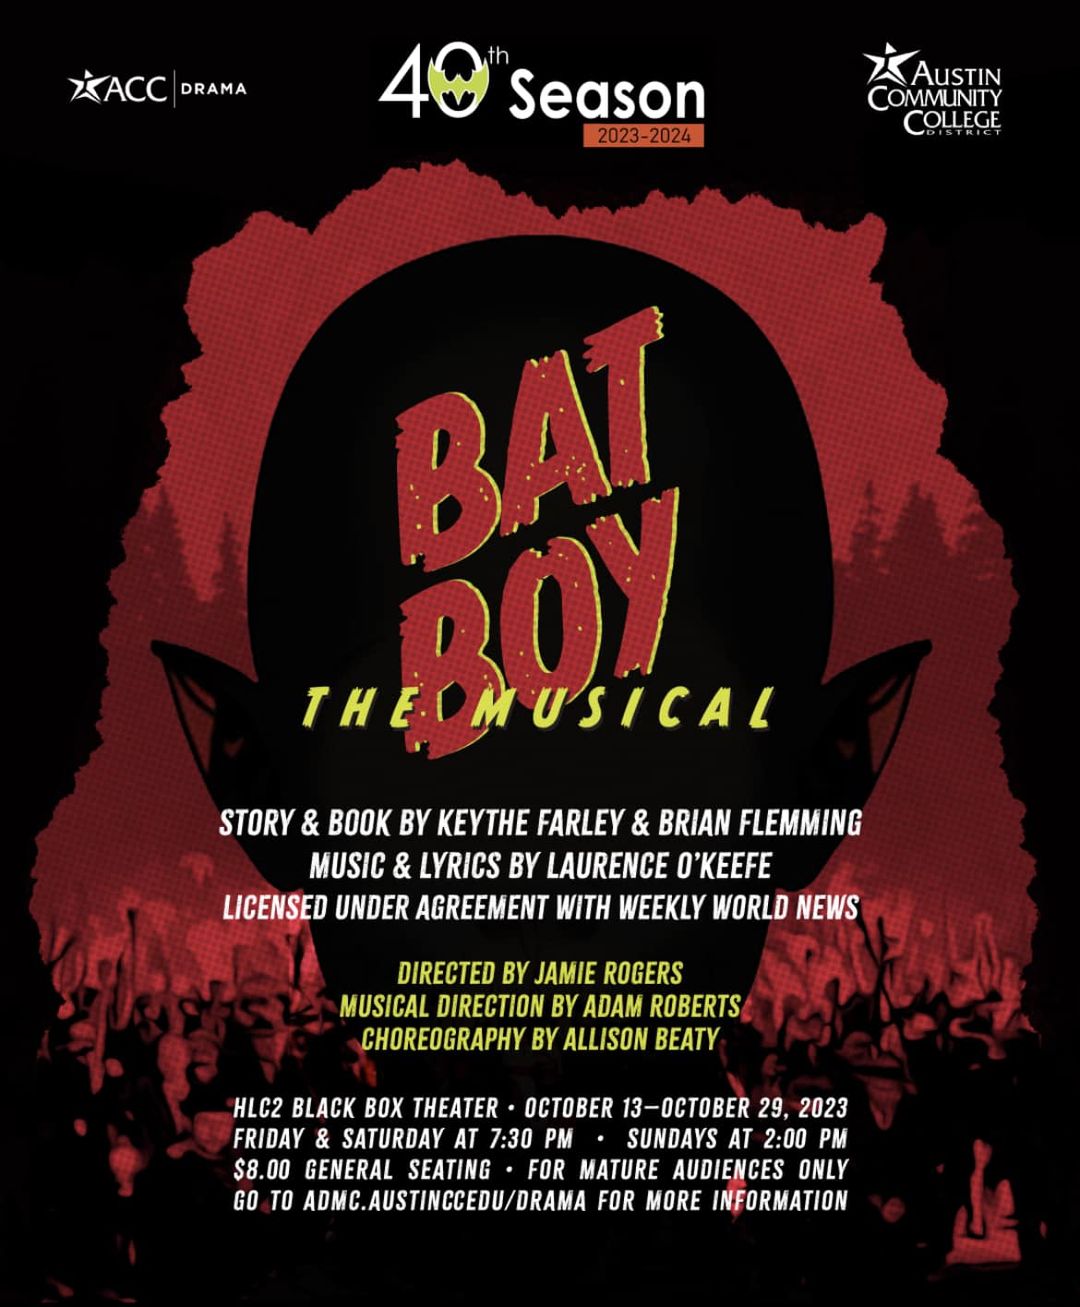 Bat Boy, the   musical by Austin Community College